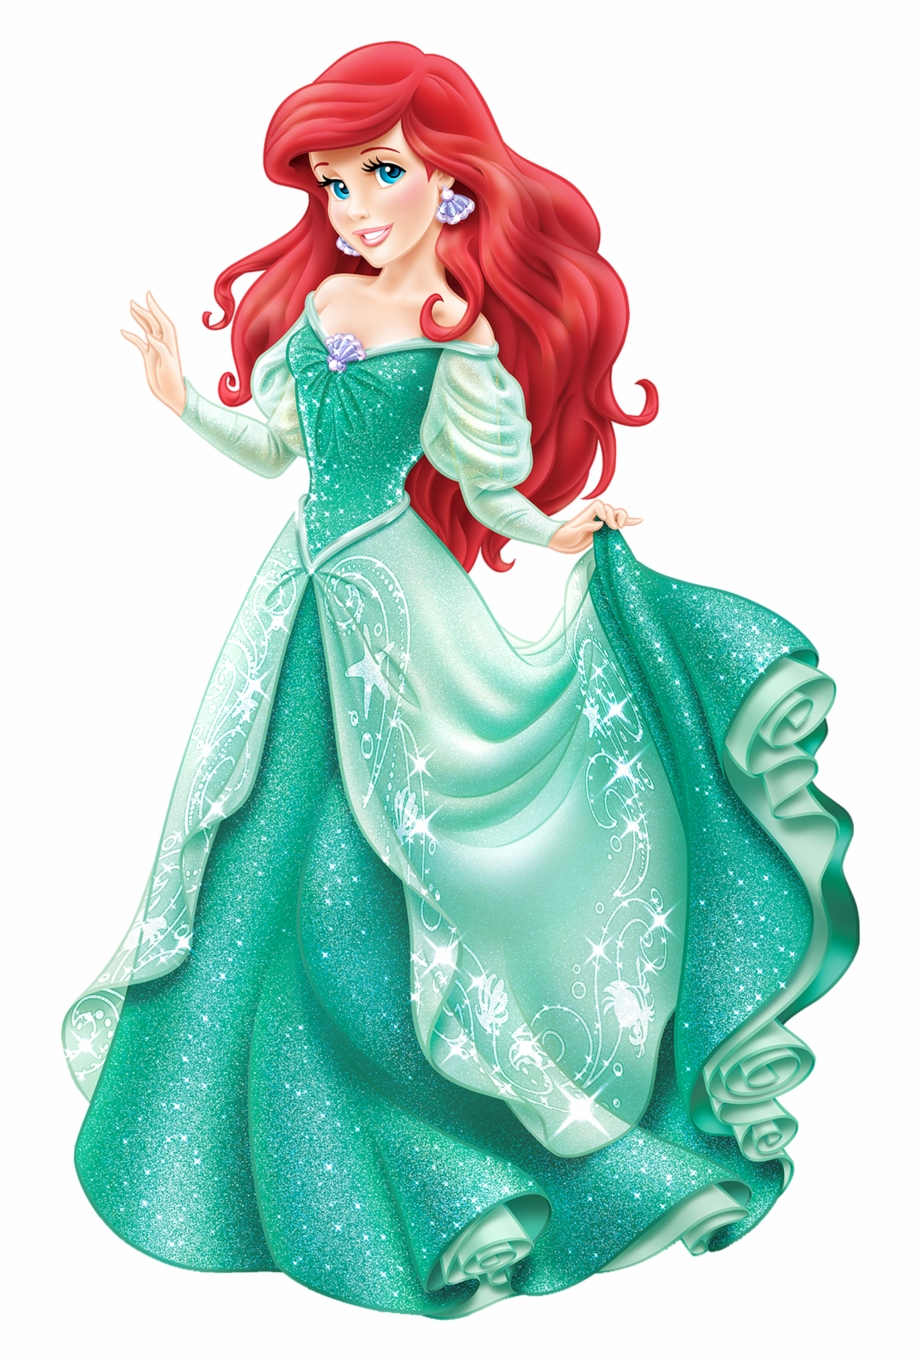 Ariel disney princess.